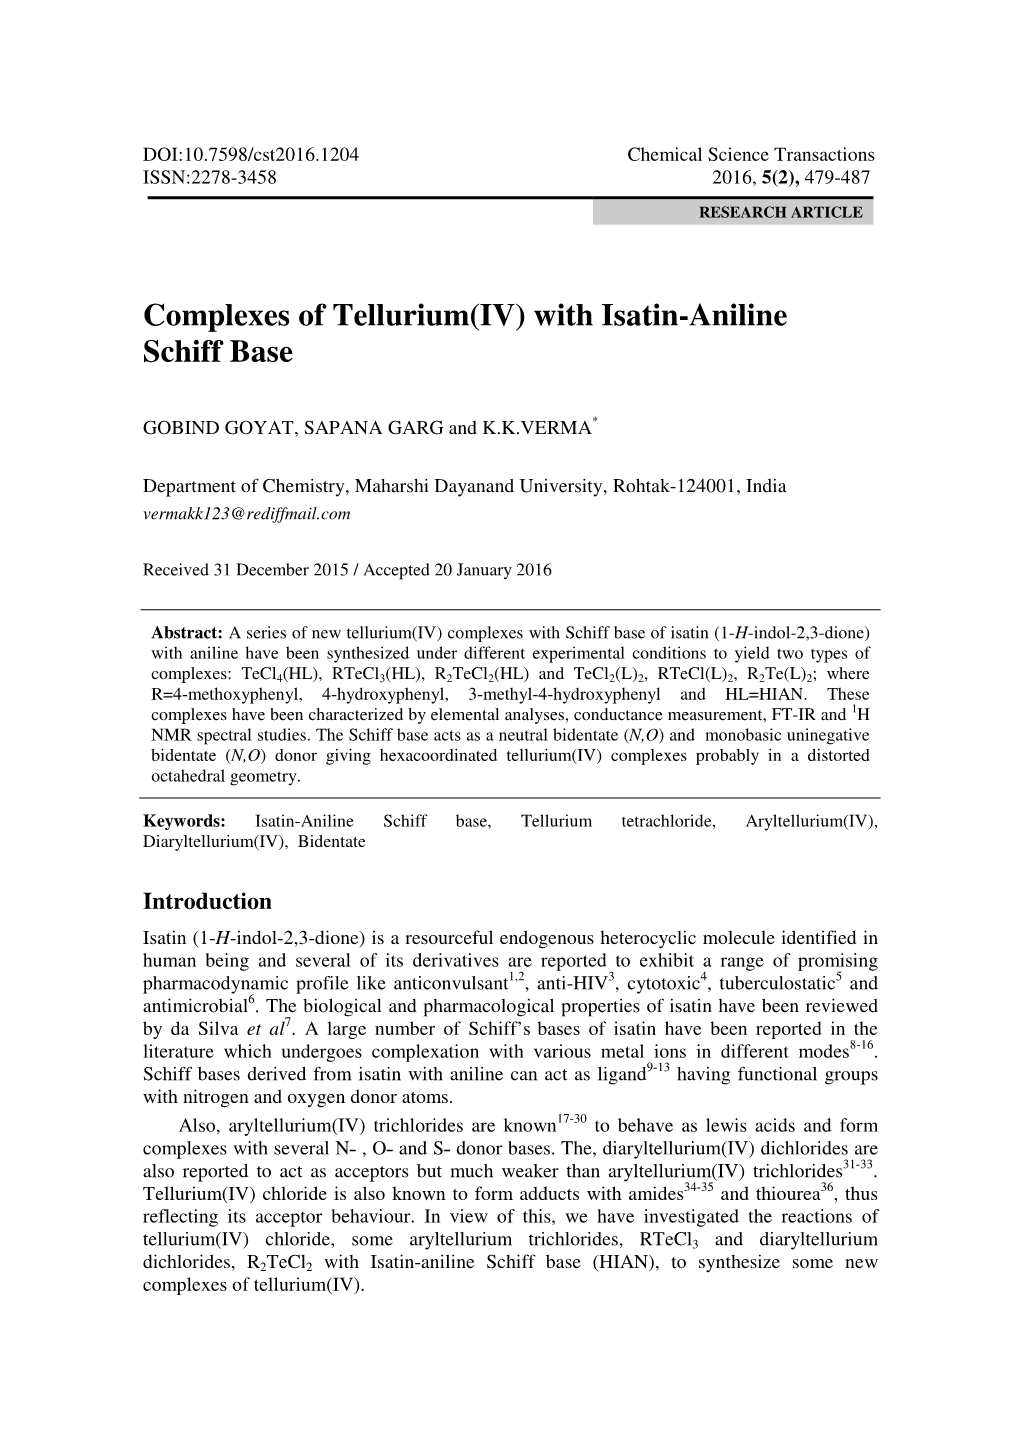 Complexes of Tellurium(IV) with Isatin-Aniline Schiff Base